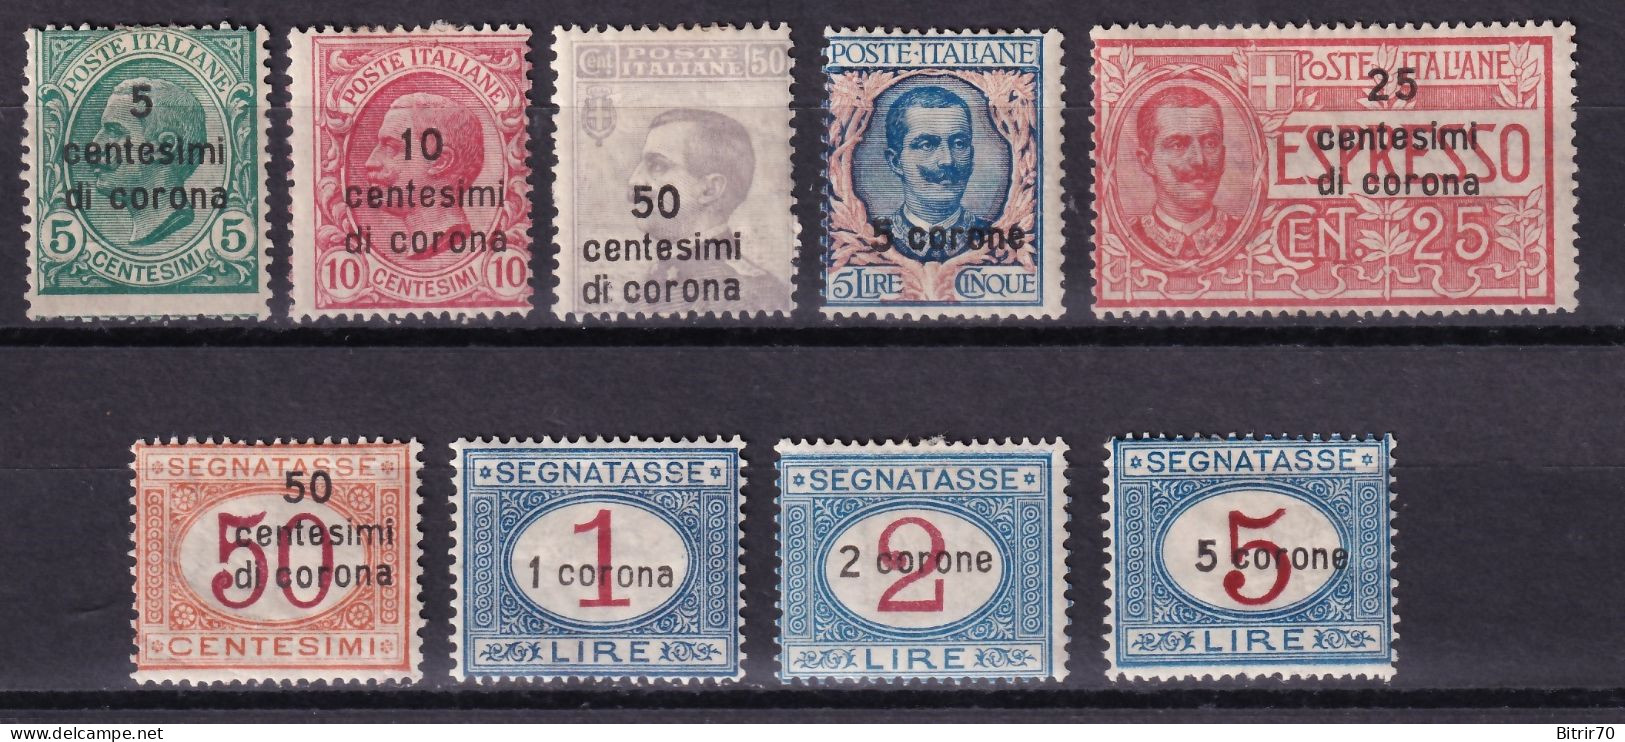 Italia, Dalmatia 1921-1922 Lote De Sellos, Distintos Valores, MH - Dalmatie